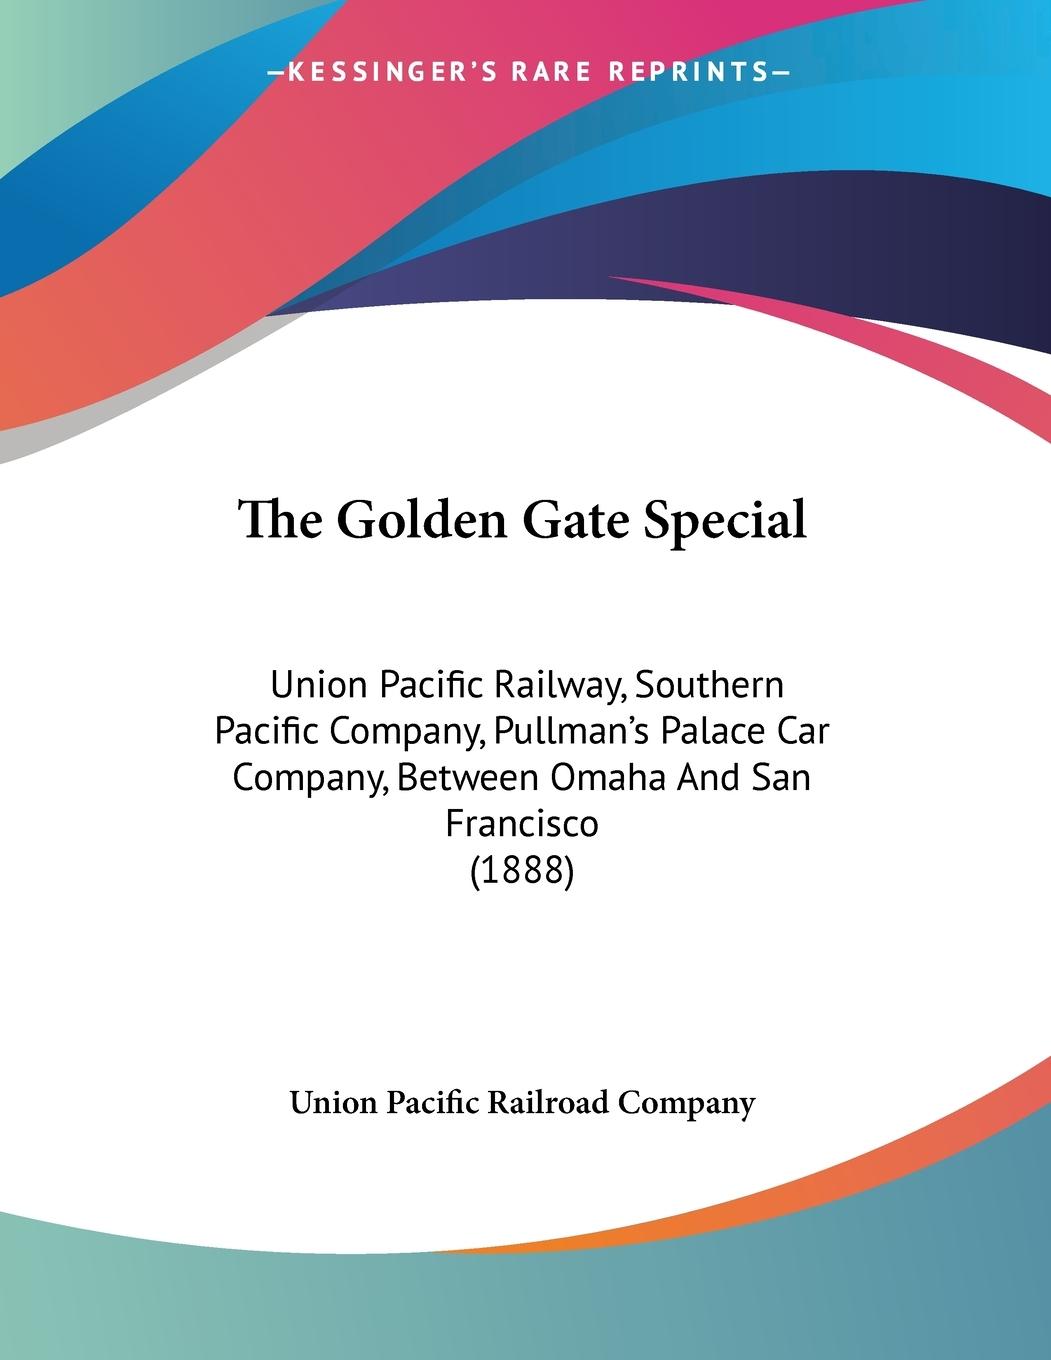 The Golden Gate Special - Union Pacific Railroad Company